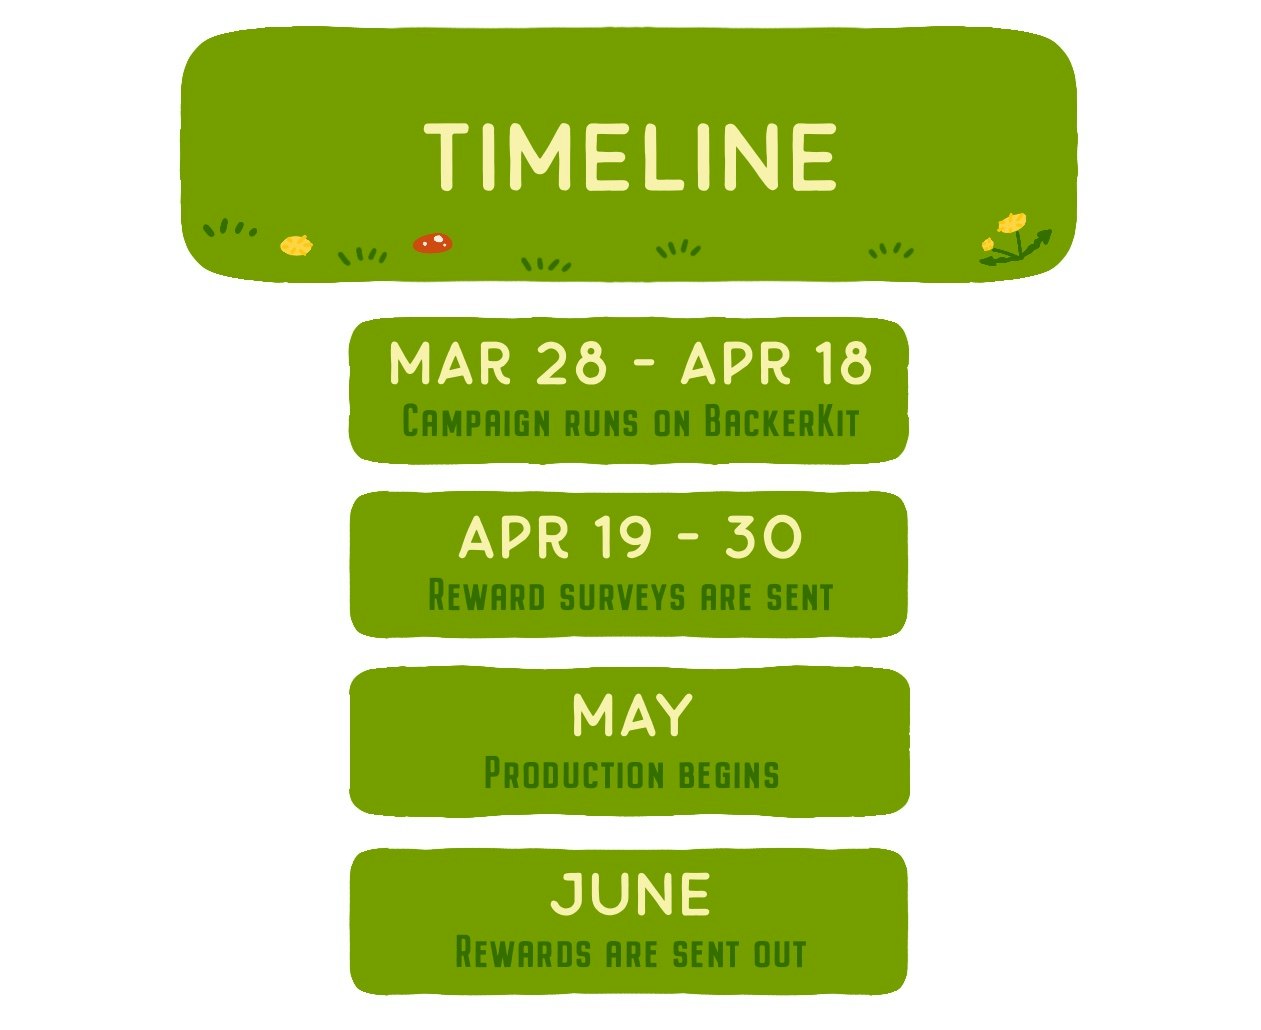 Timeline. May 28 - April 18, Campaign runs on BackerKit. April 19 - 30, Reward surveys are sent. May, Production begins. June, Rewards are sent out.